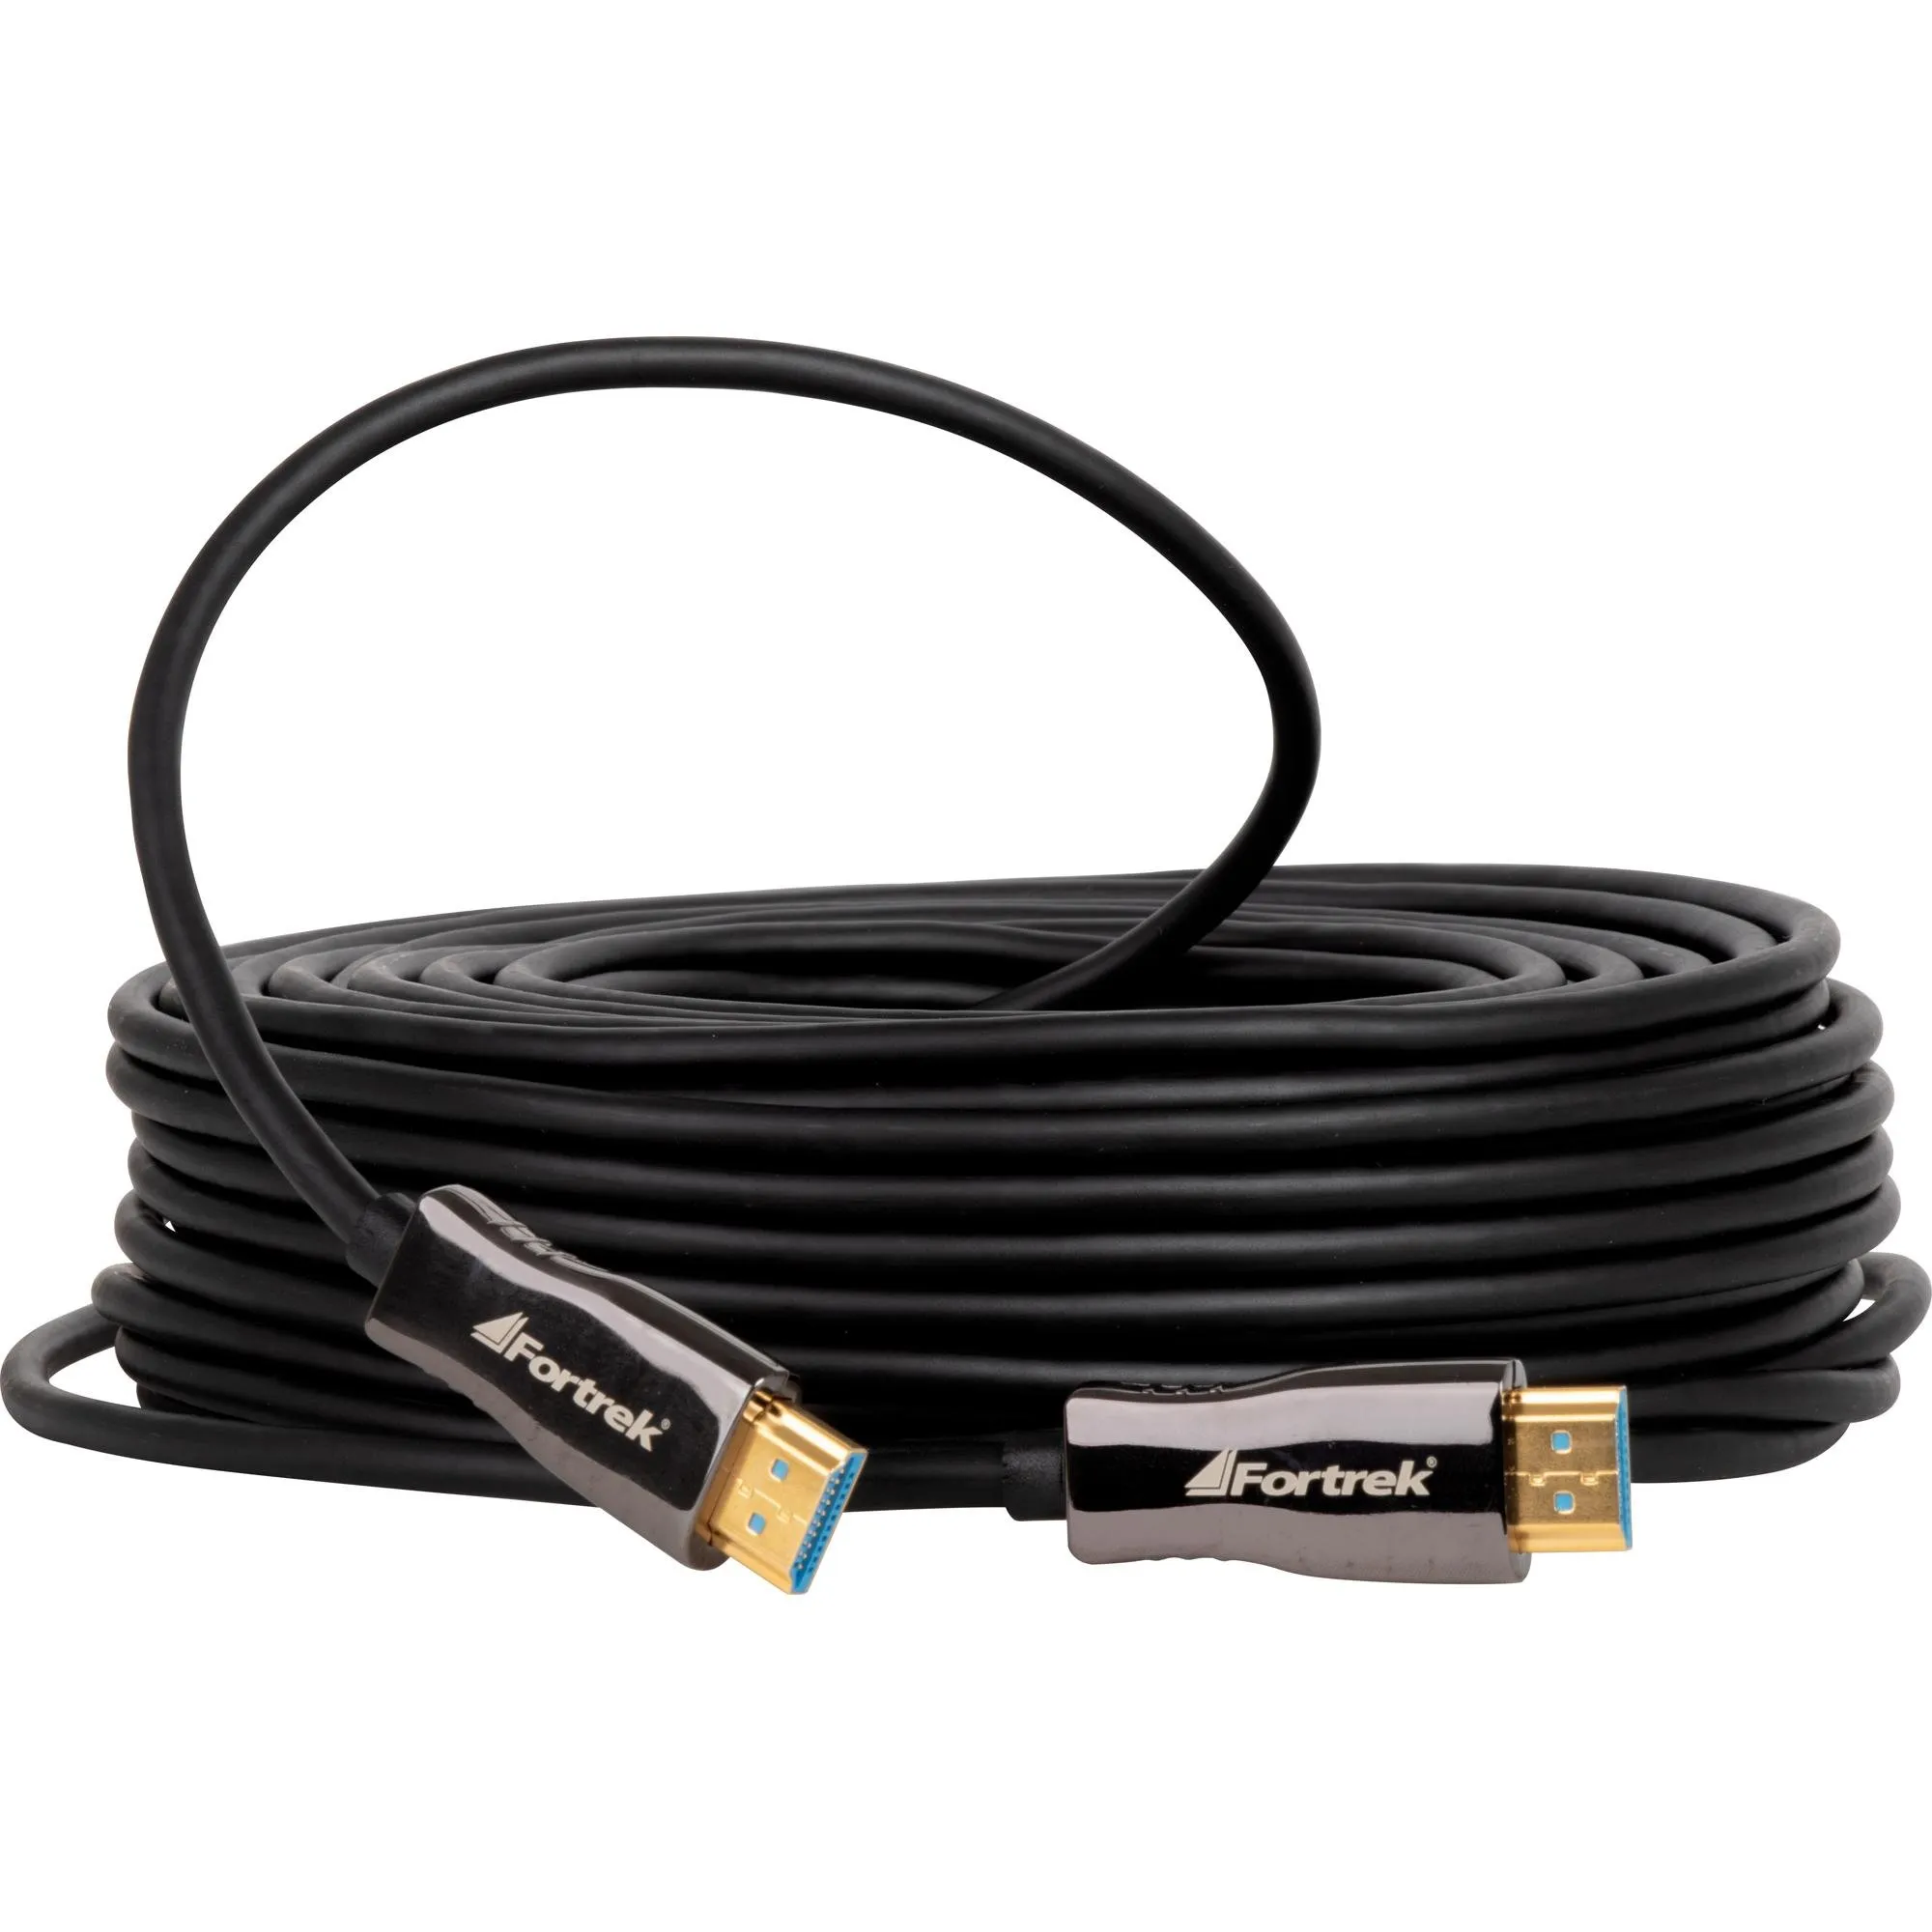 Super Long Distance High Quality Optical Fiber HDMI Cable 4K UHD 60hz